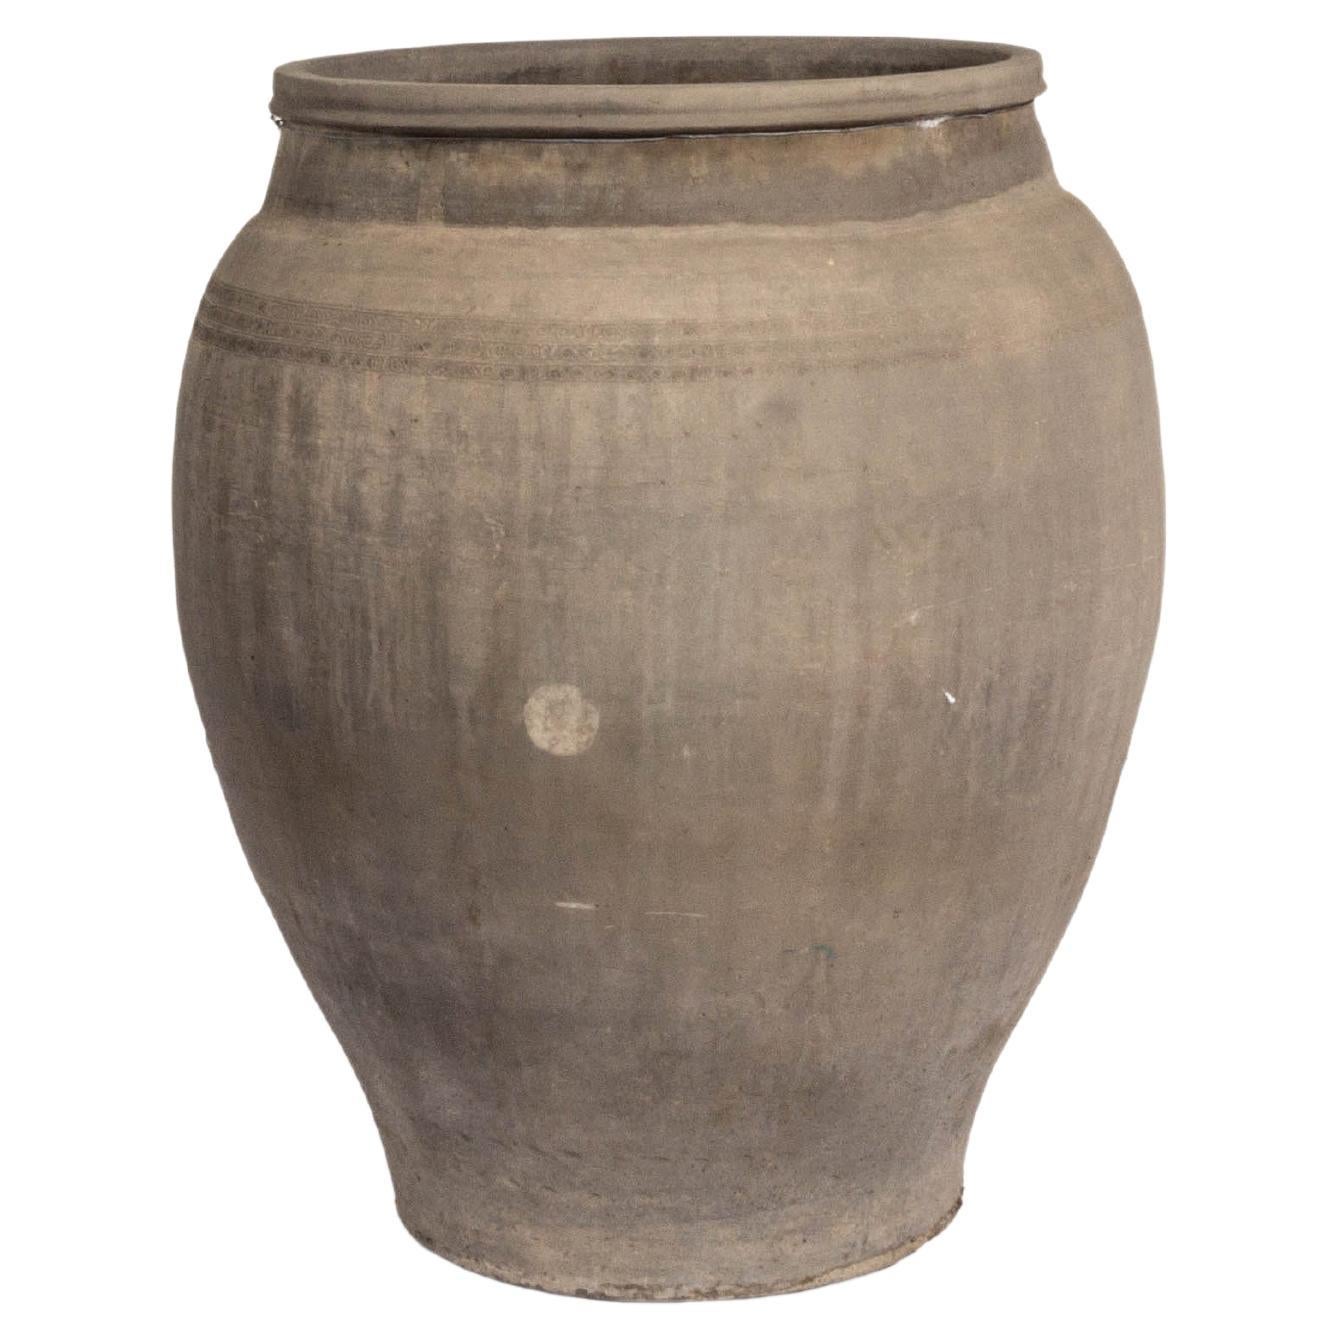 Monumental Terra Cotta Storage Jar (medium)